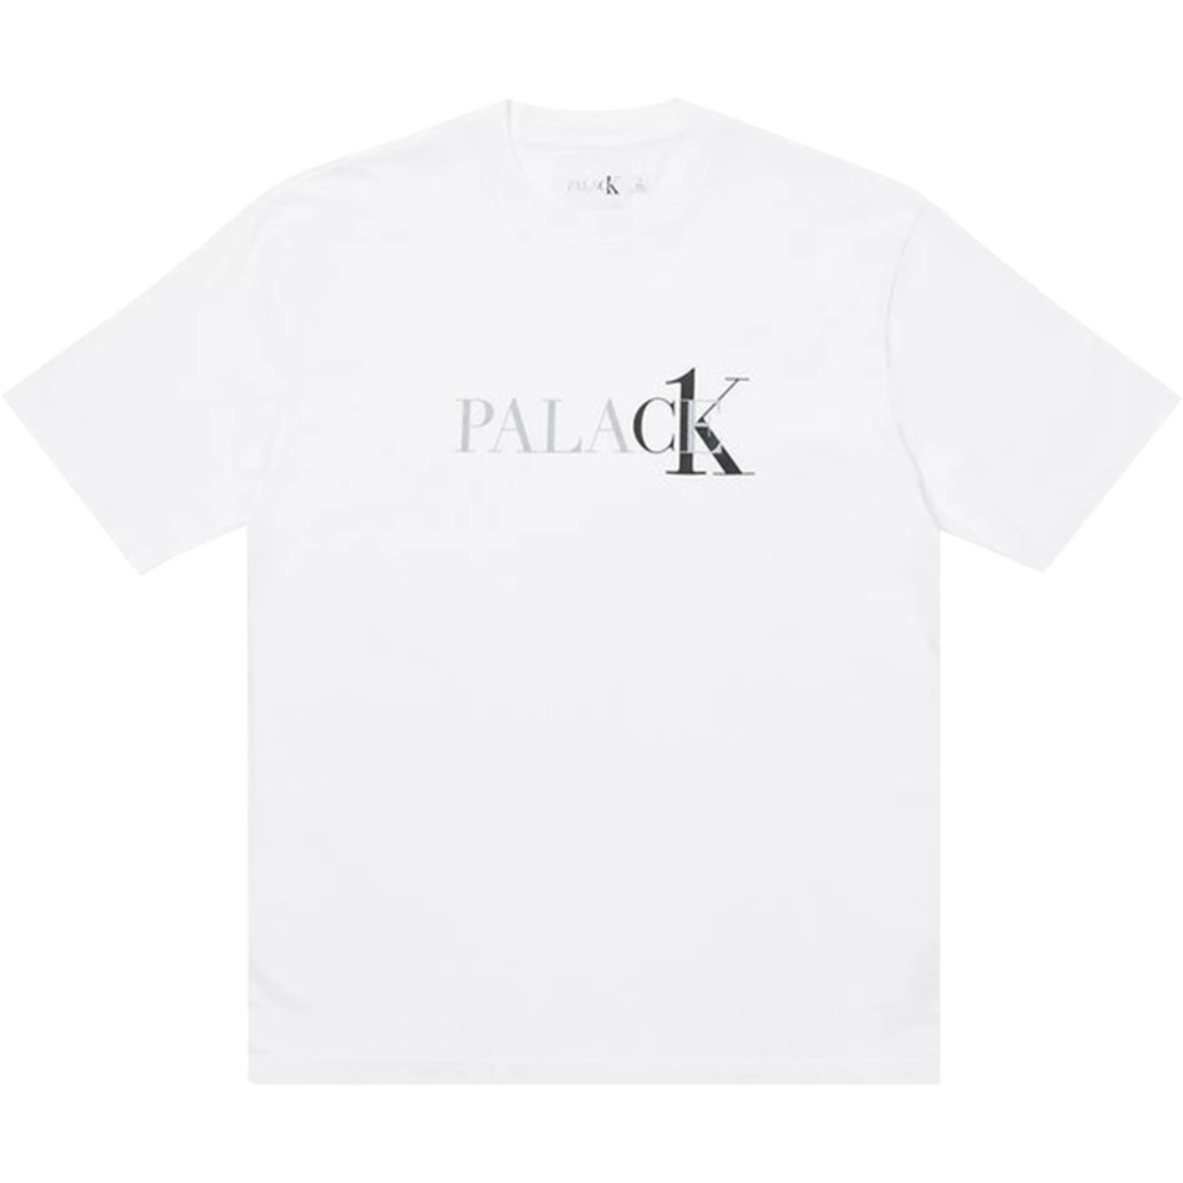 Palace x Calvin Klein Logo Tee - White from Supreme